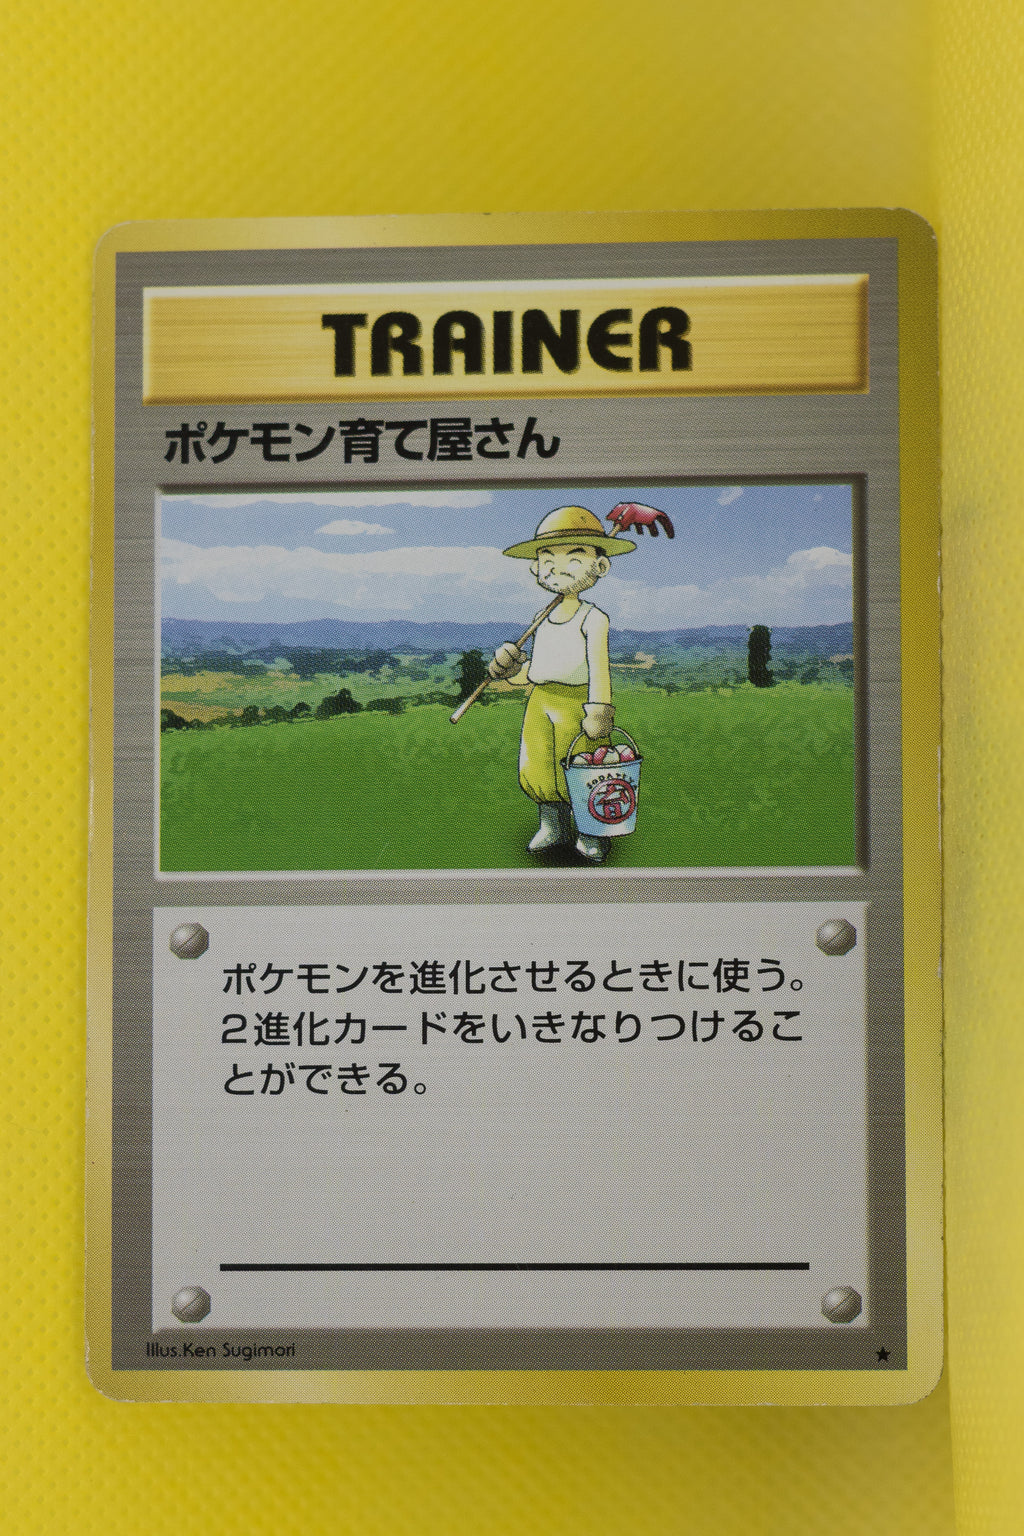 Base Trainer Pokemon Breeder Rare Thecardcollector Uk